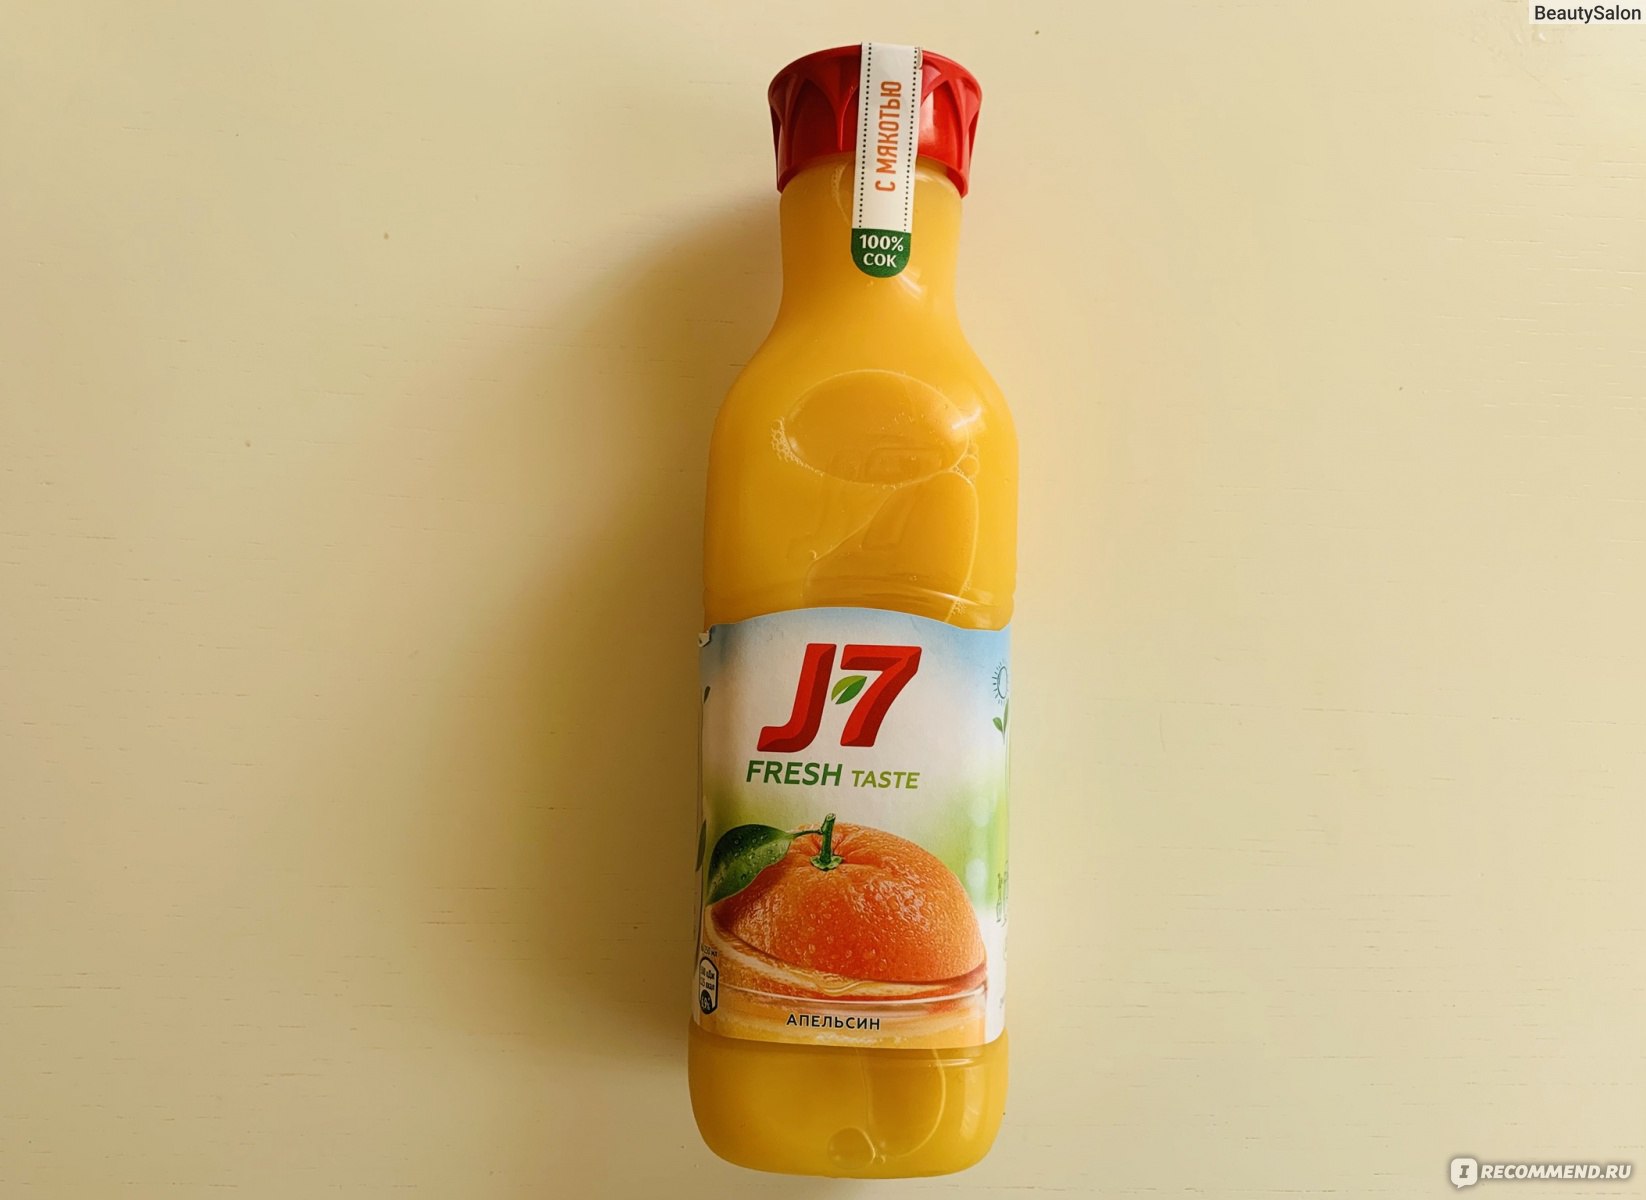 J7 fresh. J7 Fresh taste апельсин. Сок j7 апельсин Fresh. Сок j7 Fresh taste апельсин. Сок Джей Севен апельсин в бутылке.